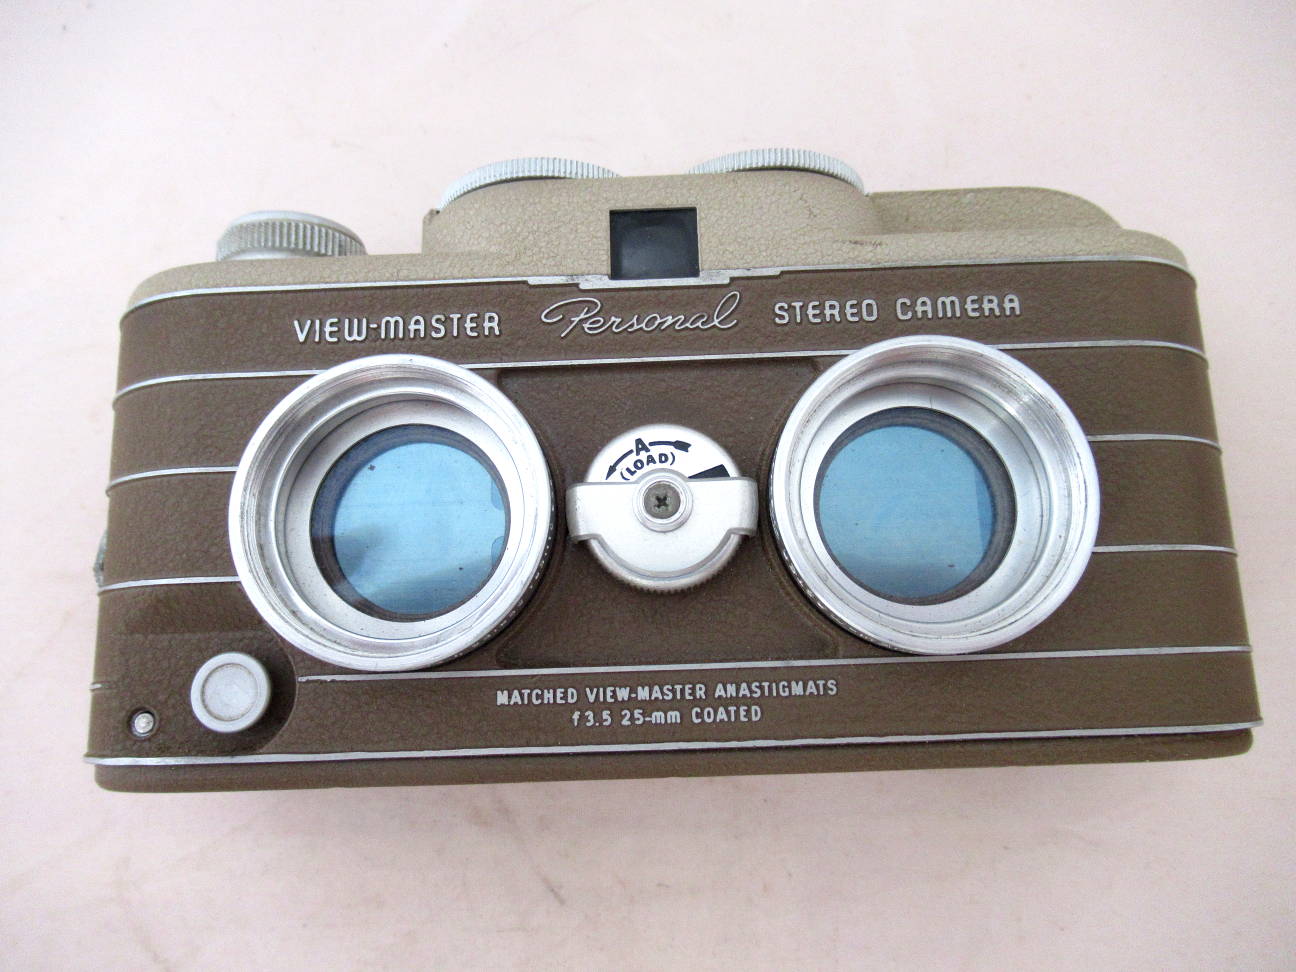 View-Master Personal Stereo Camera - Wikipedia